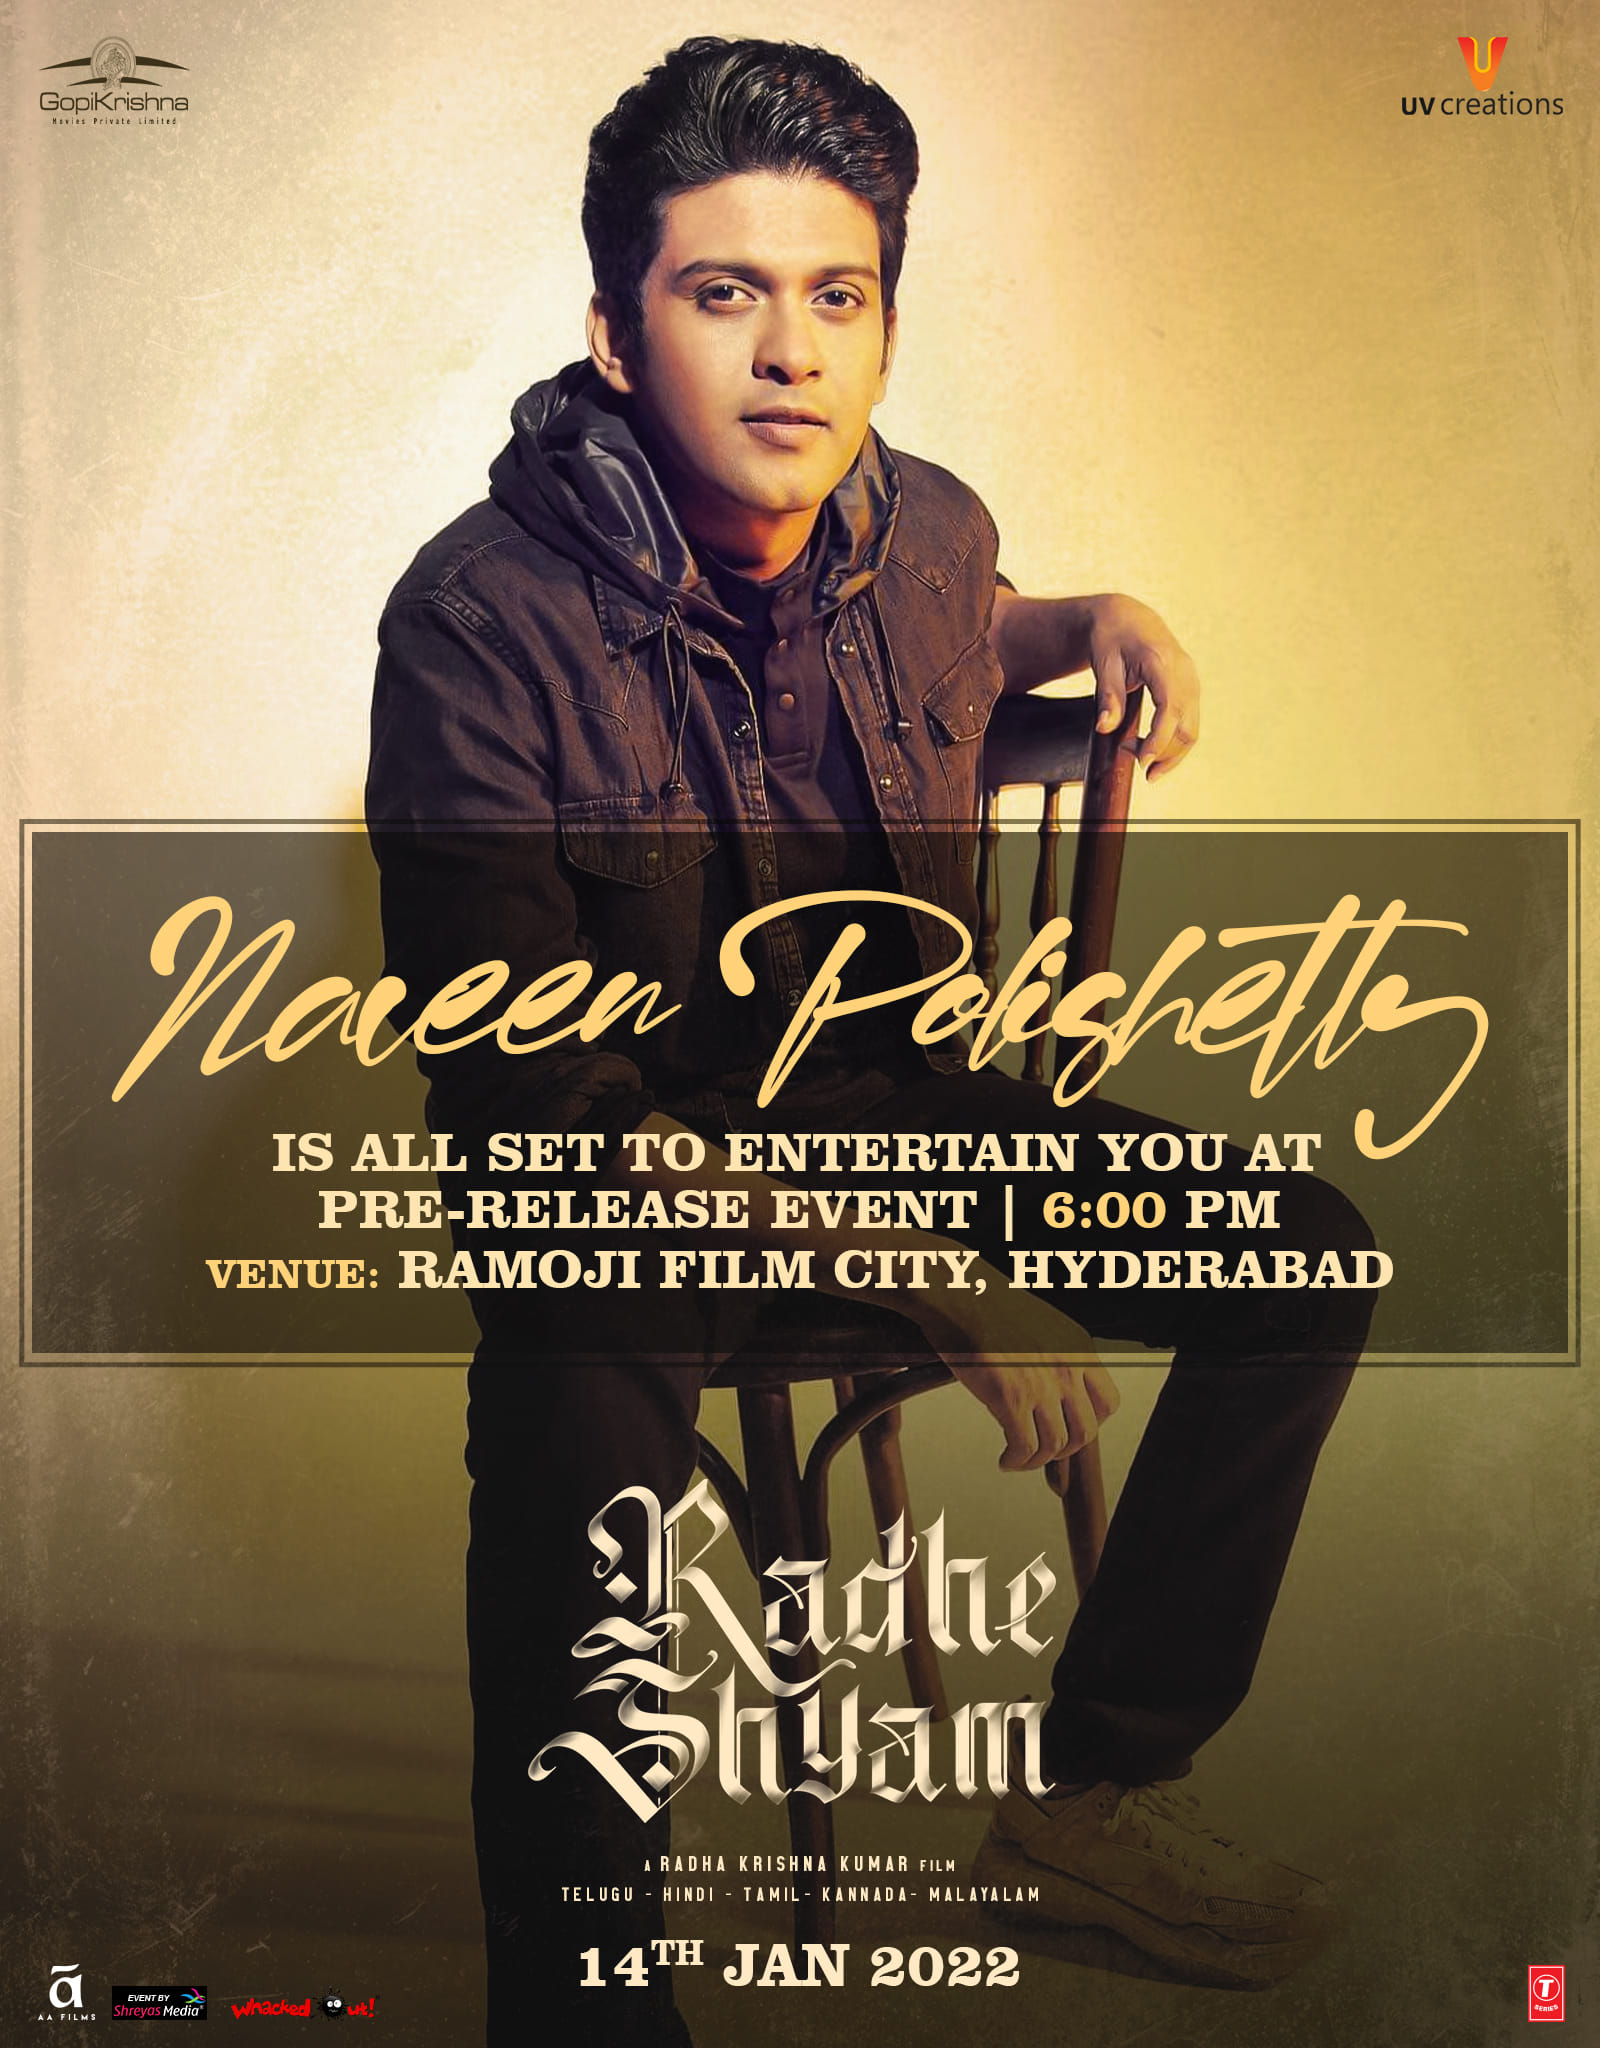 Radhe shyam pre release event